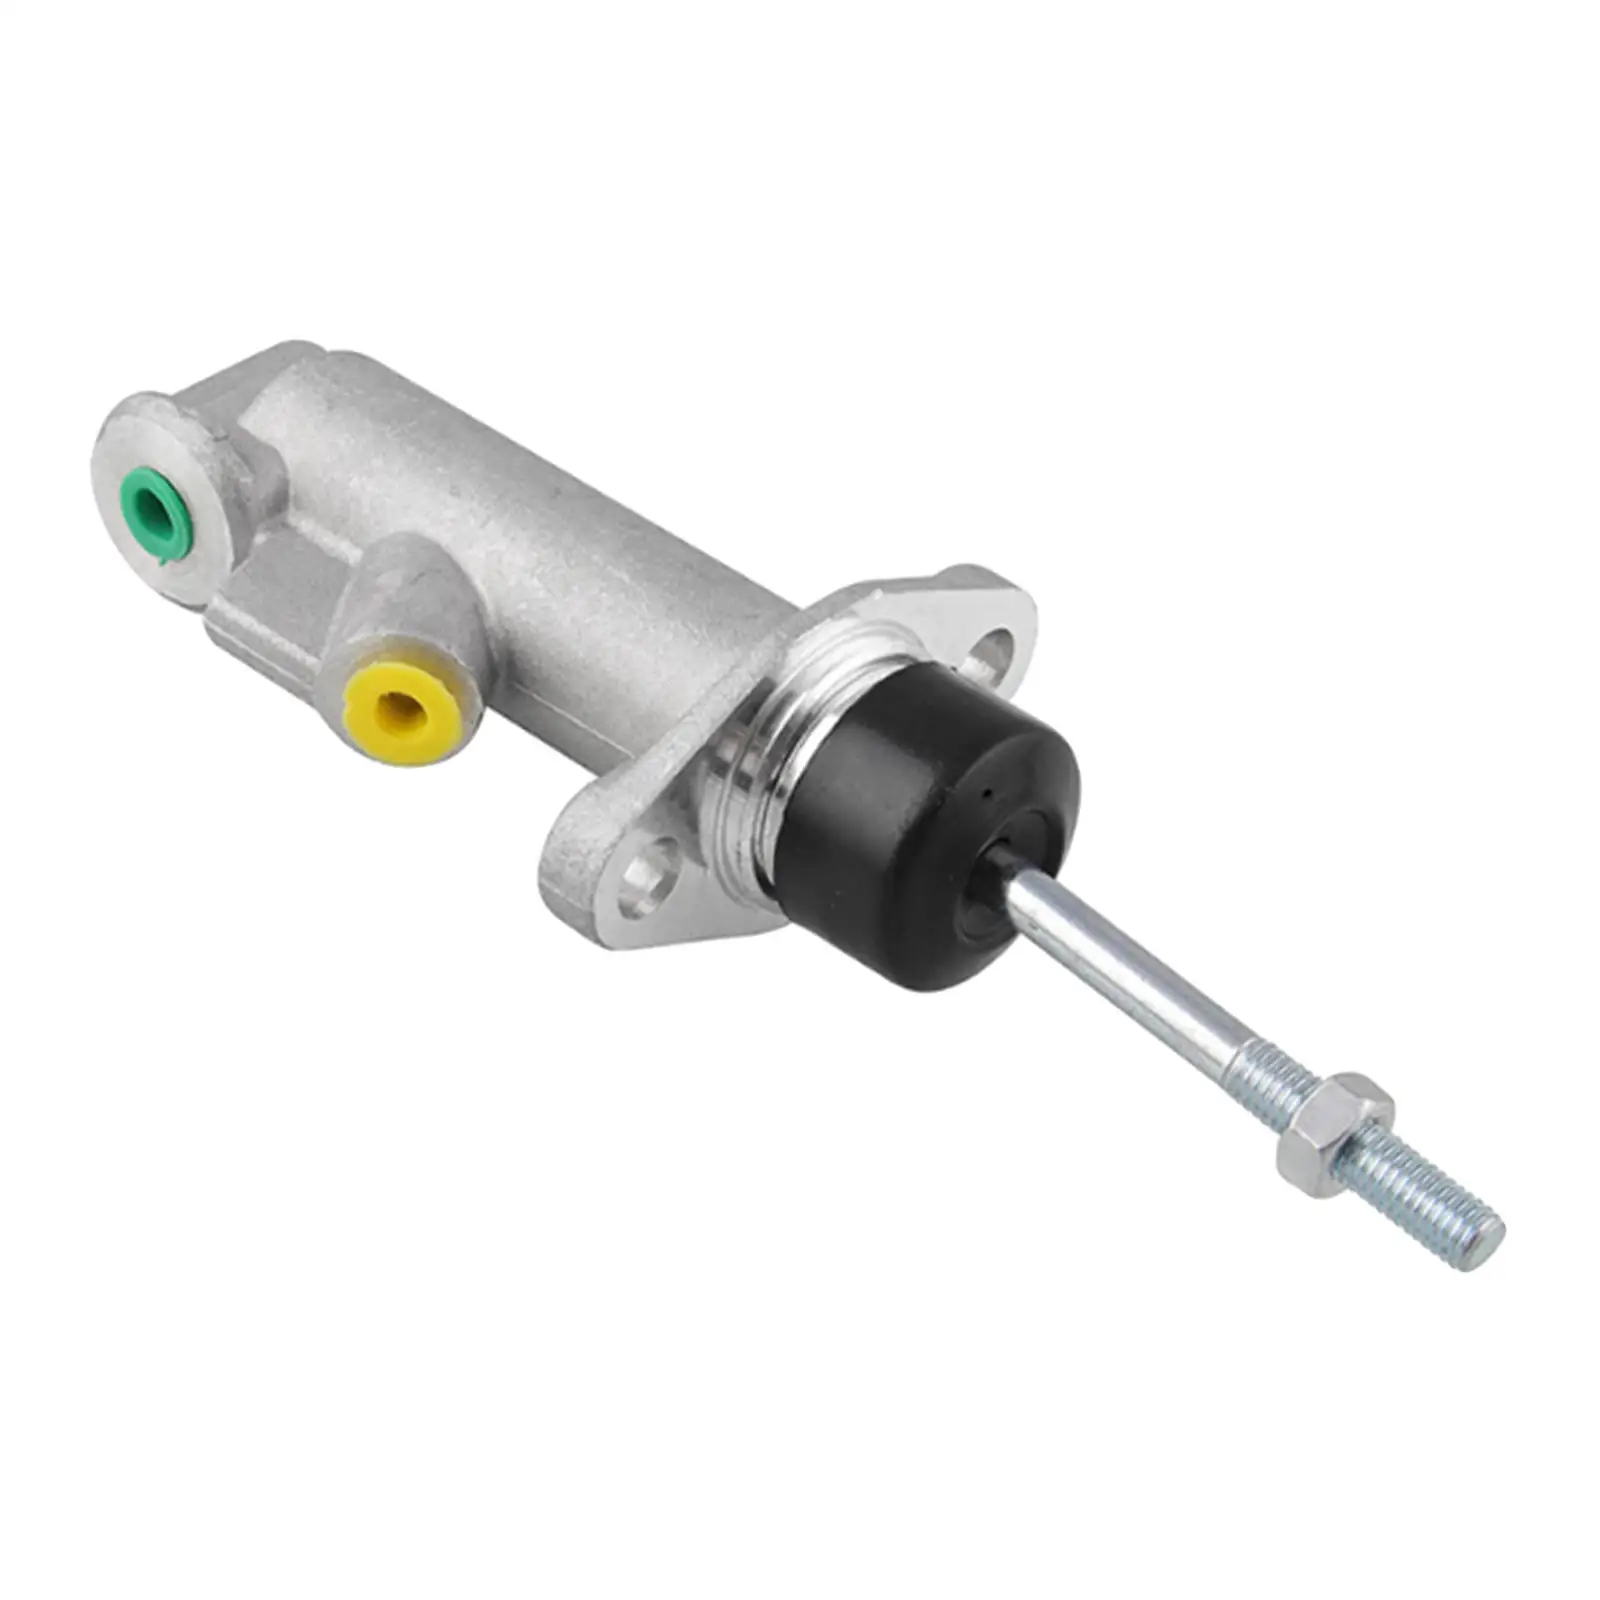 Brake Clutch Master Cylinder Aluminum Alloy ACC Replace Hydraulic Handbrake Pump Parts for Hydraulic Hydro Handbrake